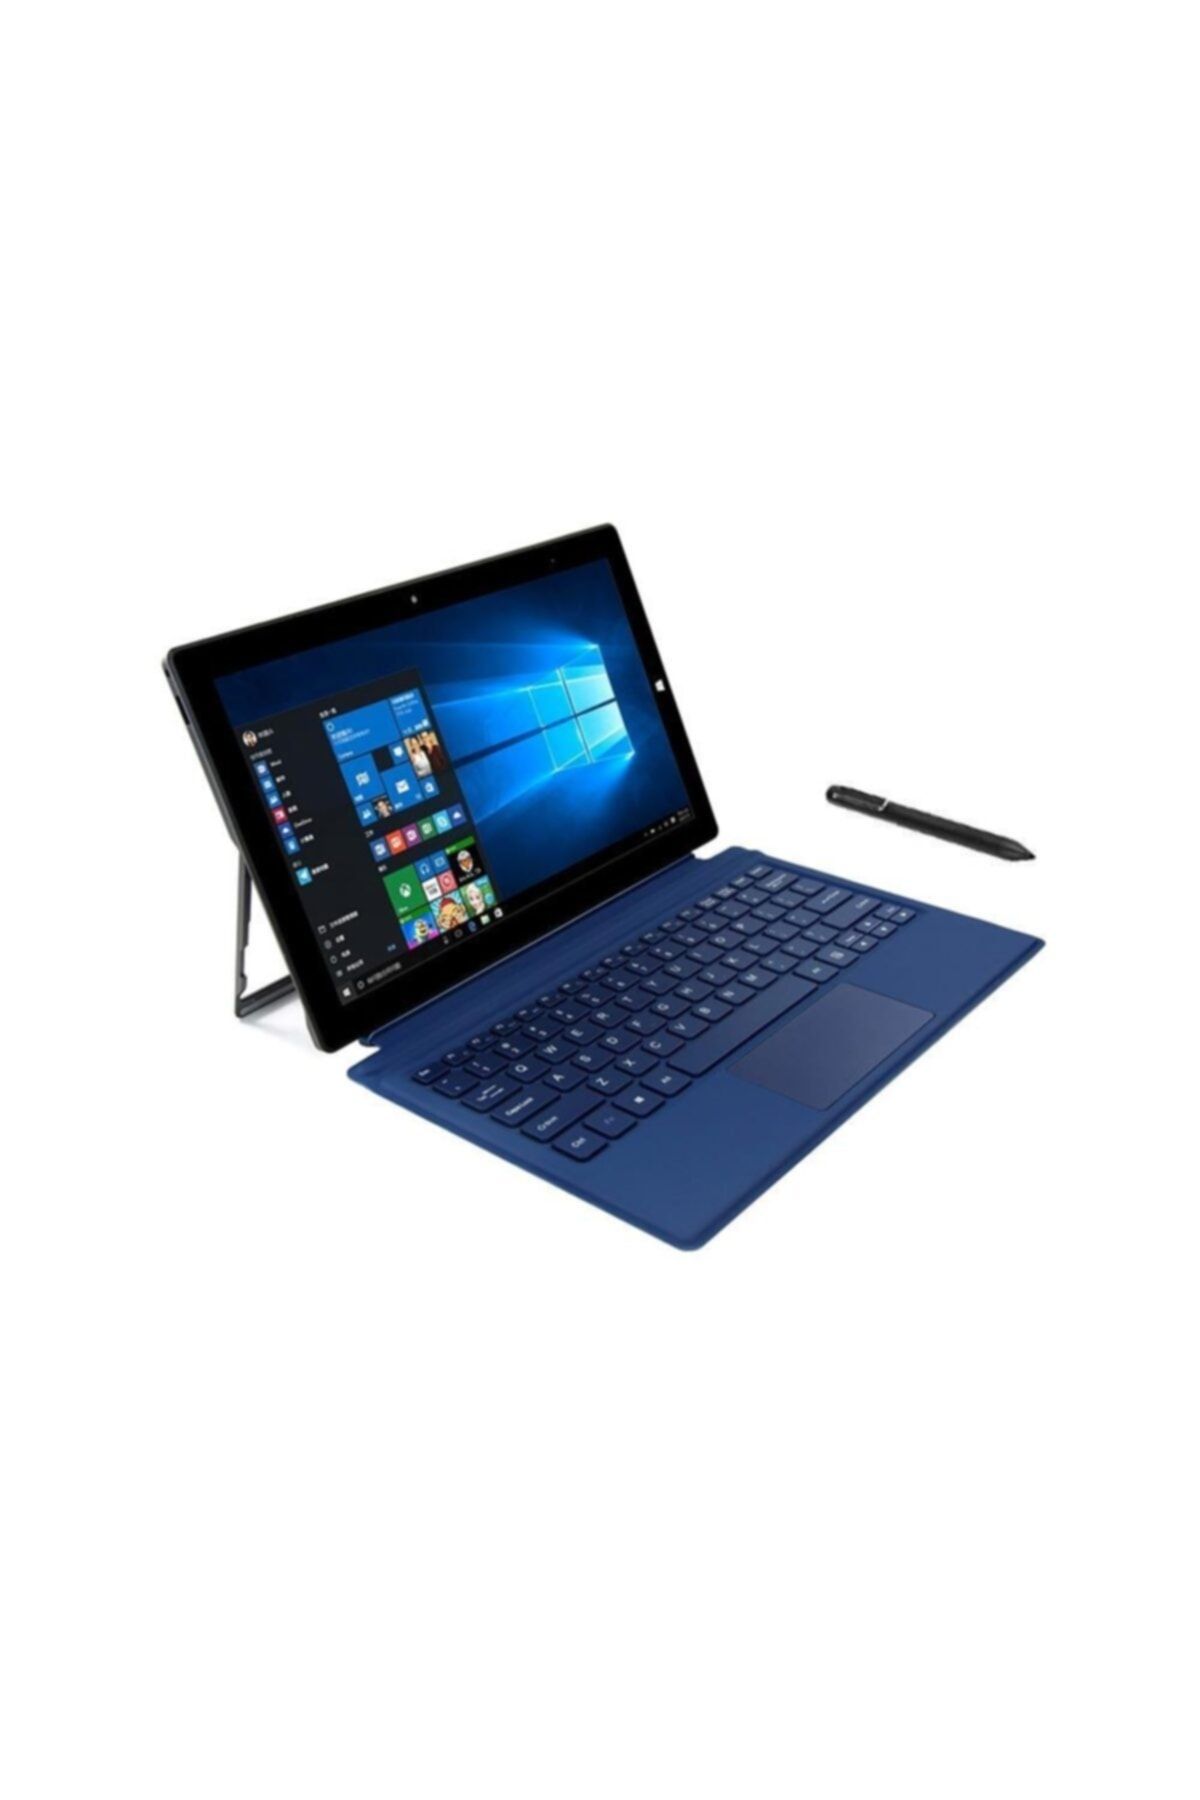 Techstorm Winpad P03 Intel Celeron N4120 6gb Ram 64gb Ssd Windows 10 Pro 10.1" Tablet Pc + Klavye +